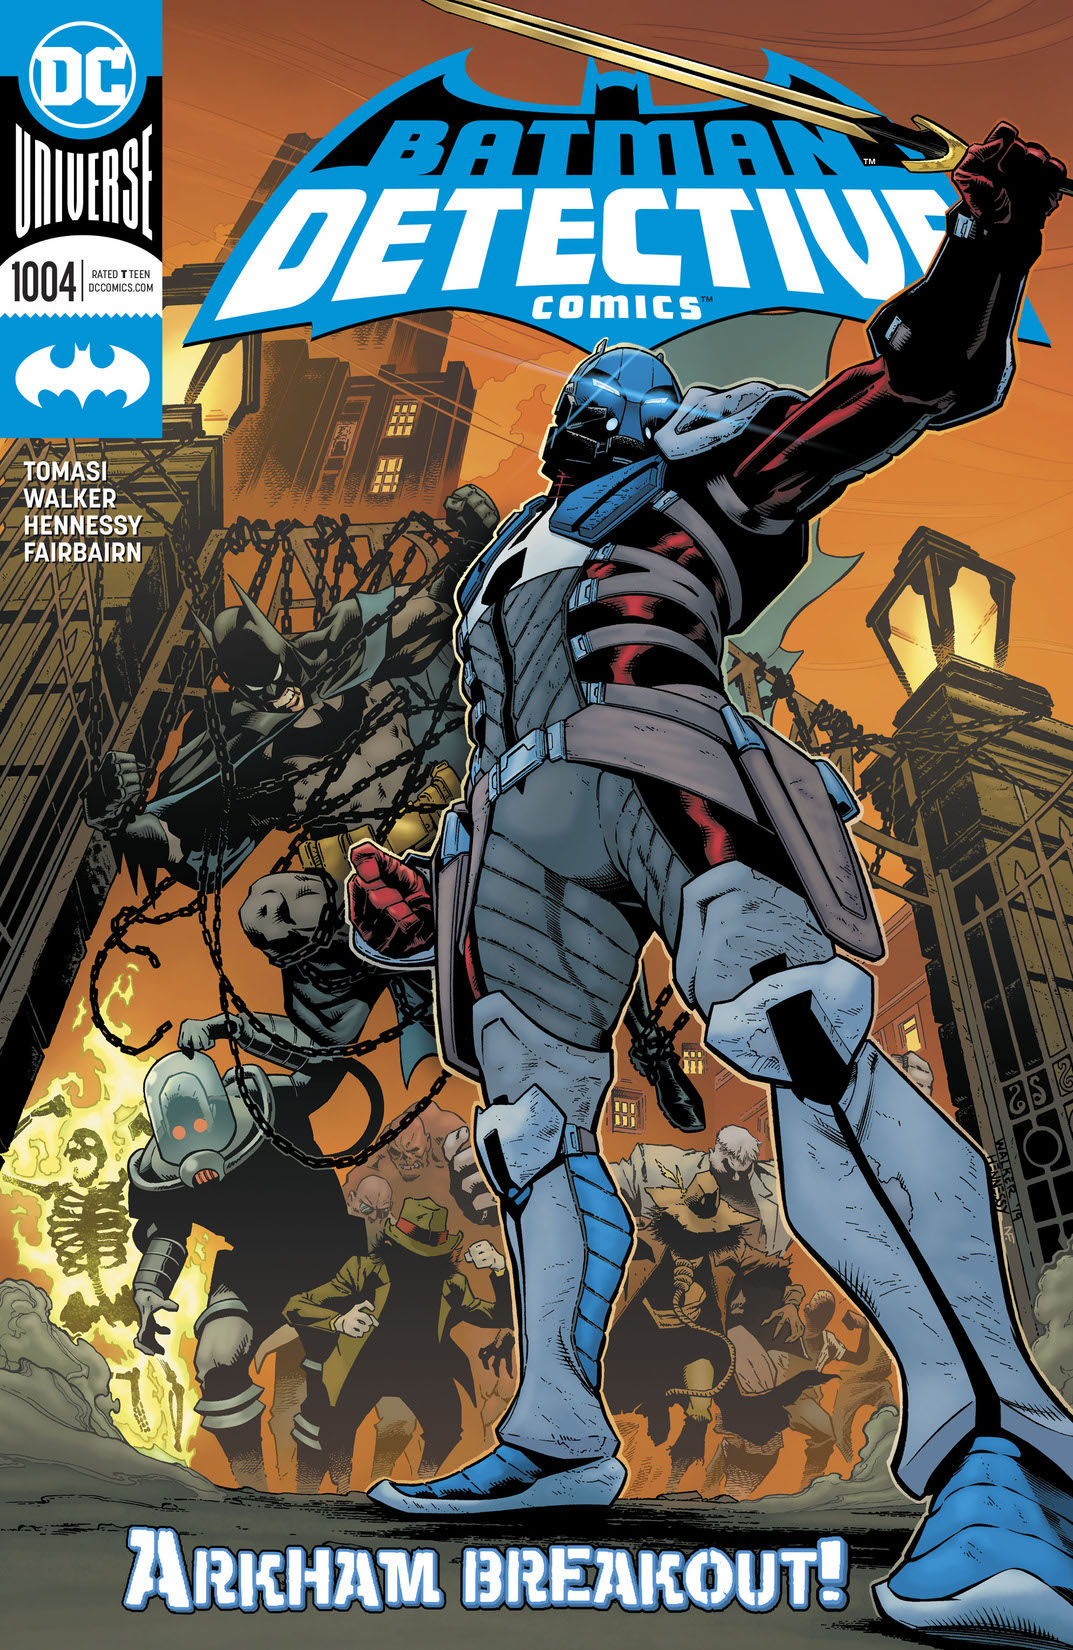 Detective Comics (2016-) #1004 preview images